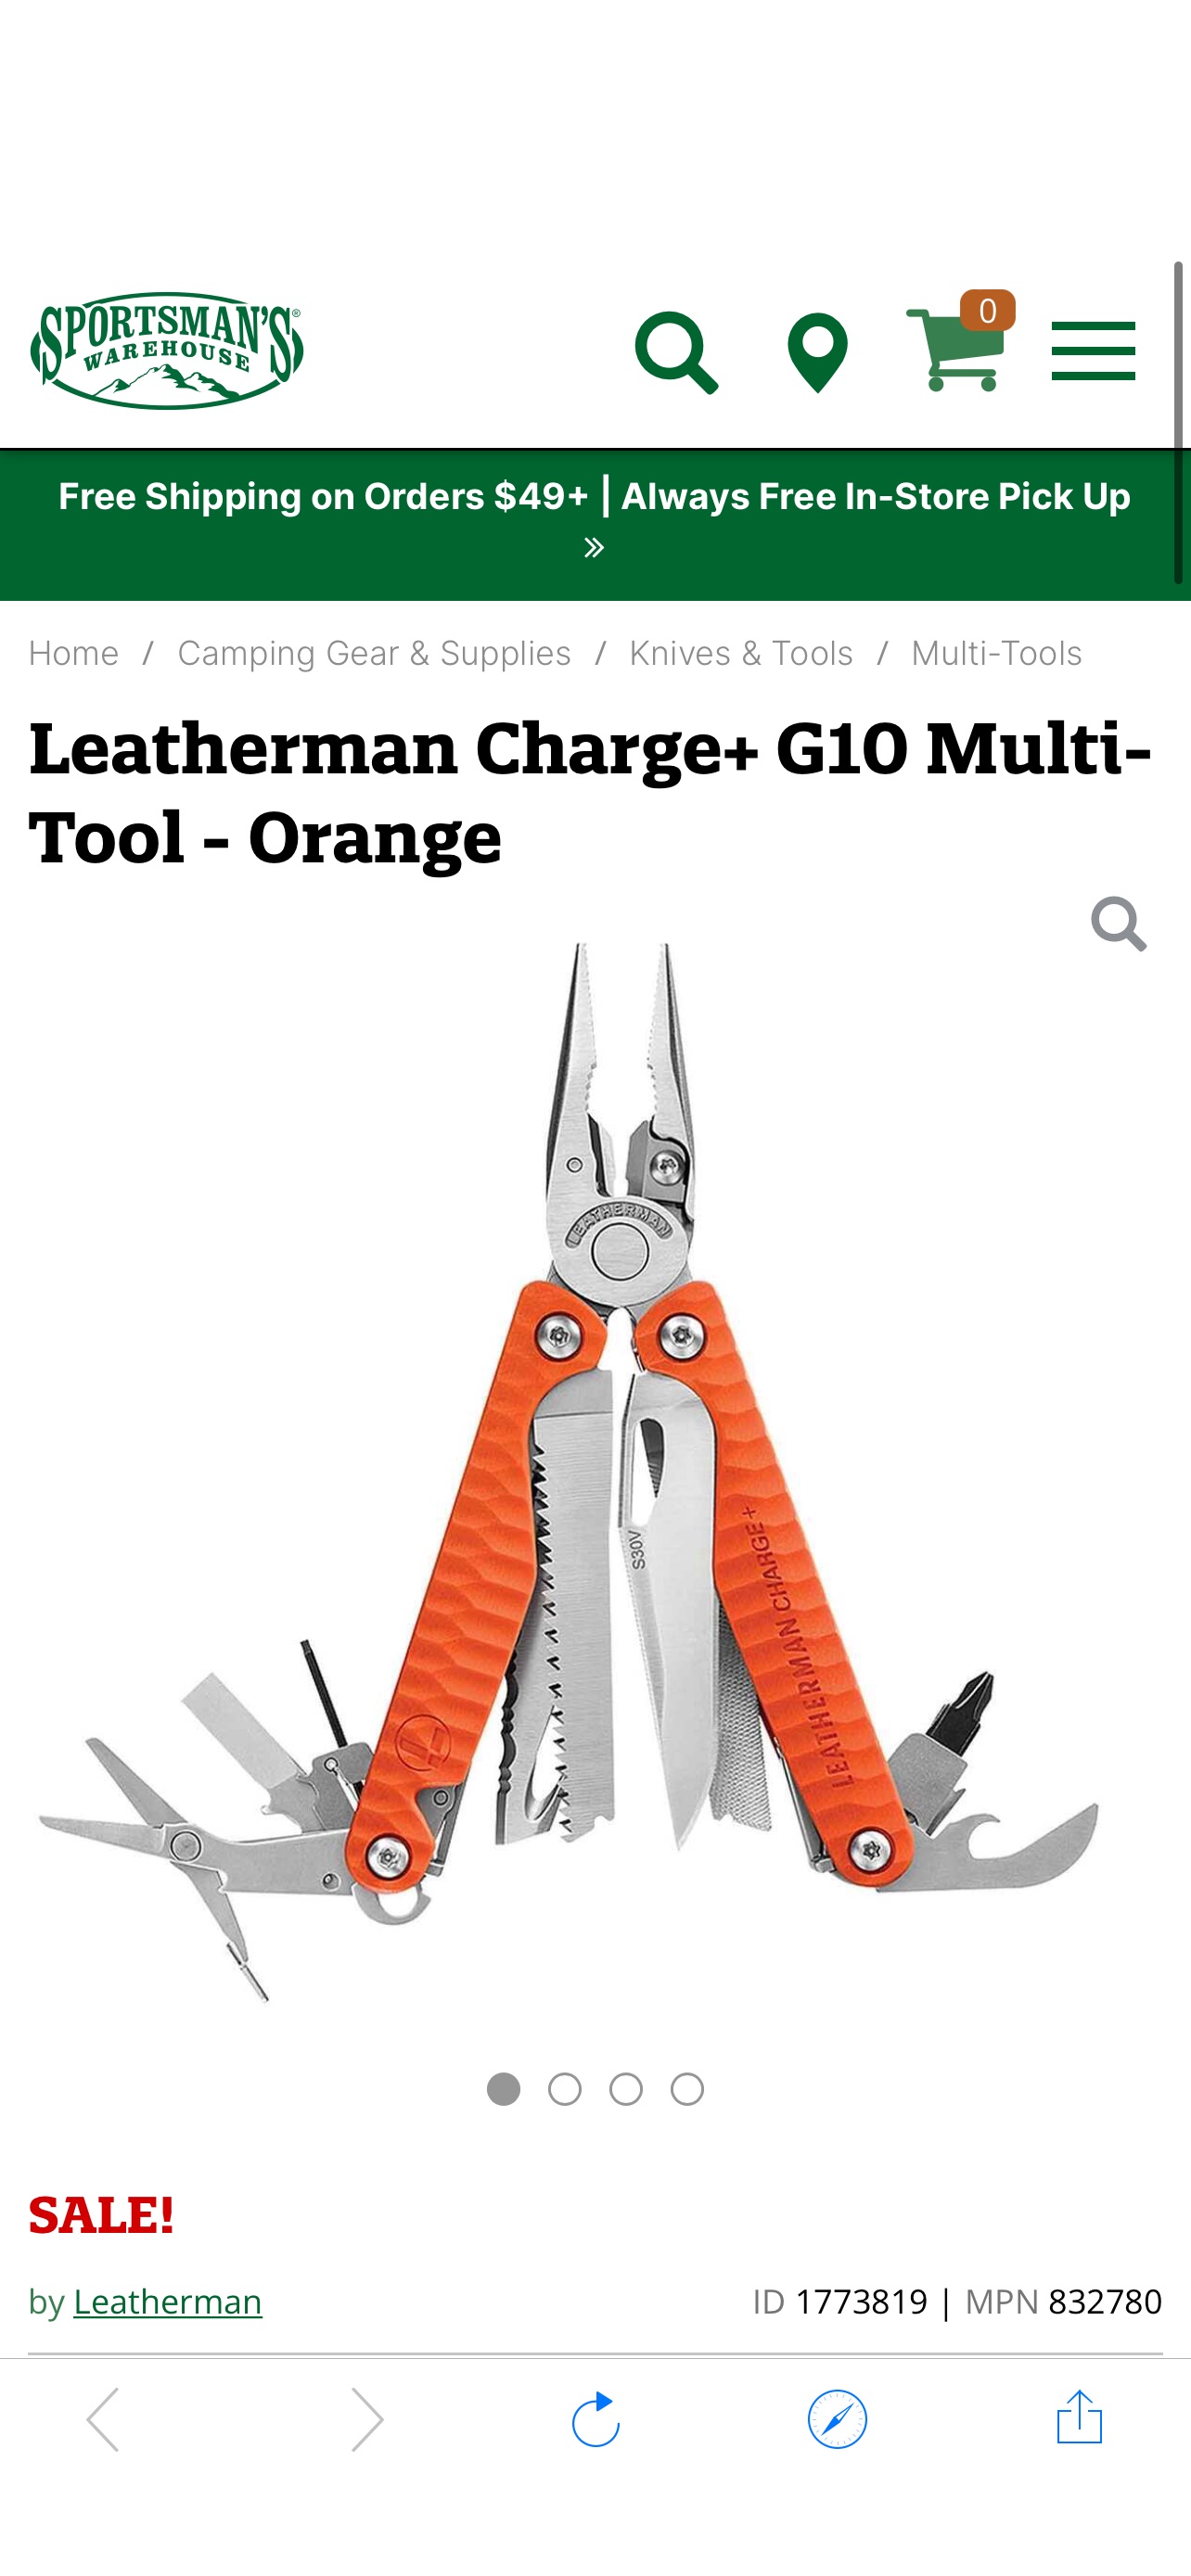 Leatherman Charge+ G10 Multi-Tool - Orange | Sportsman's Warehouse